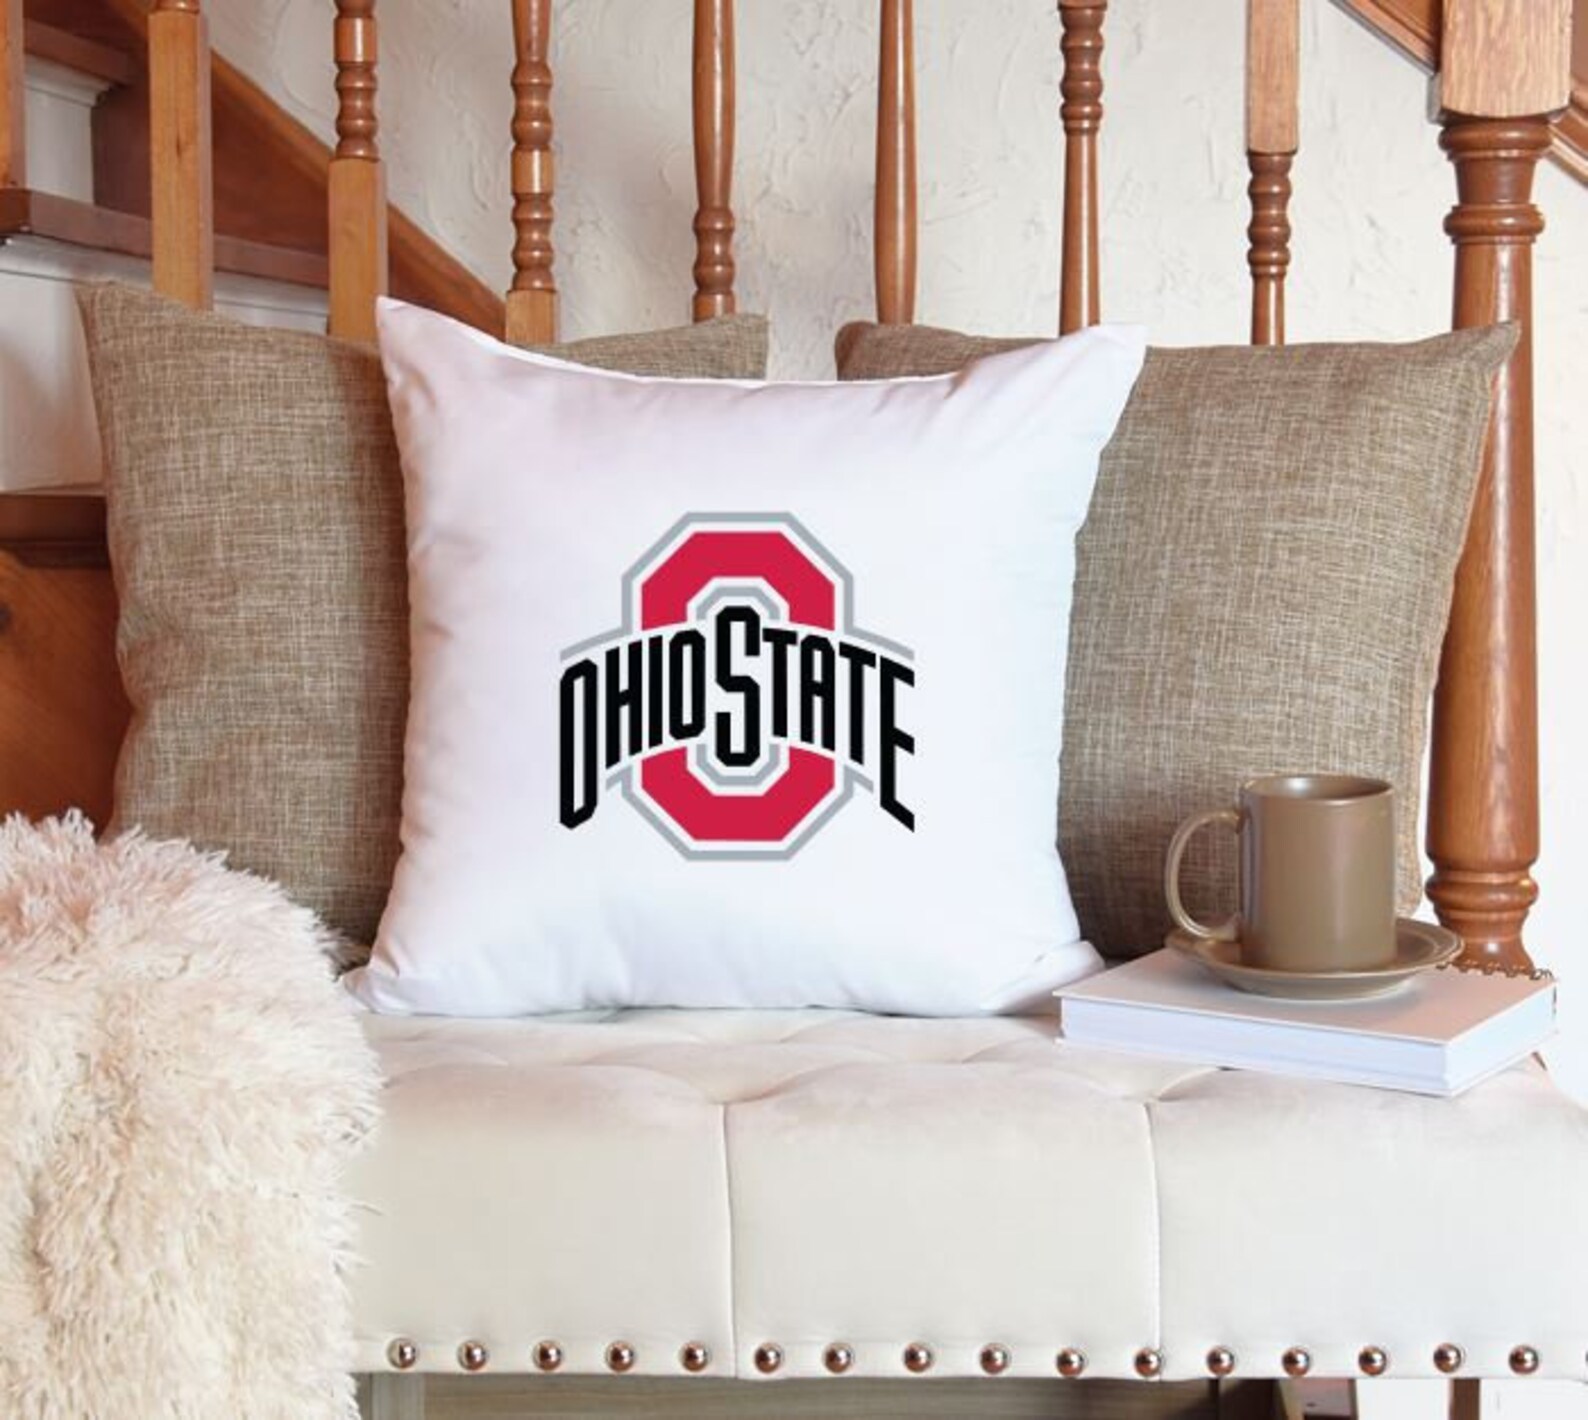 Decorate white pillow with Ohio state logo.